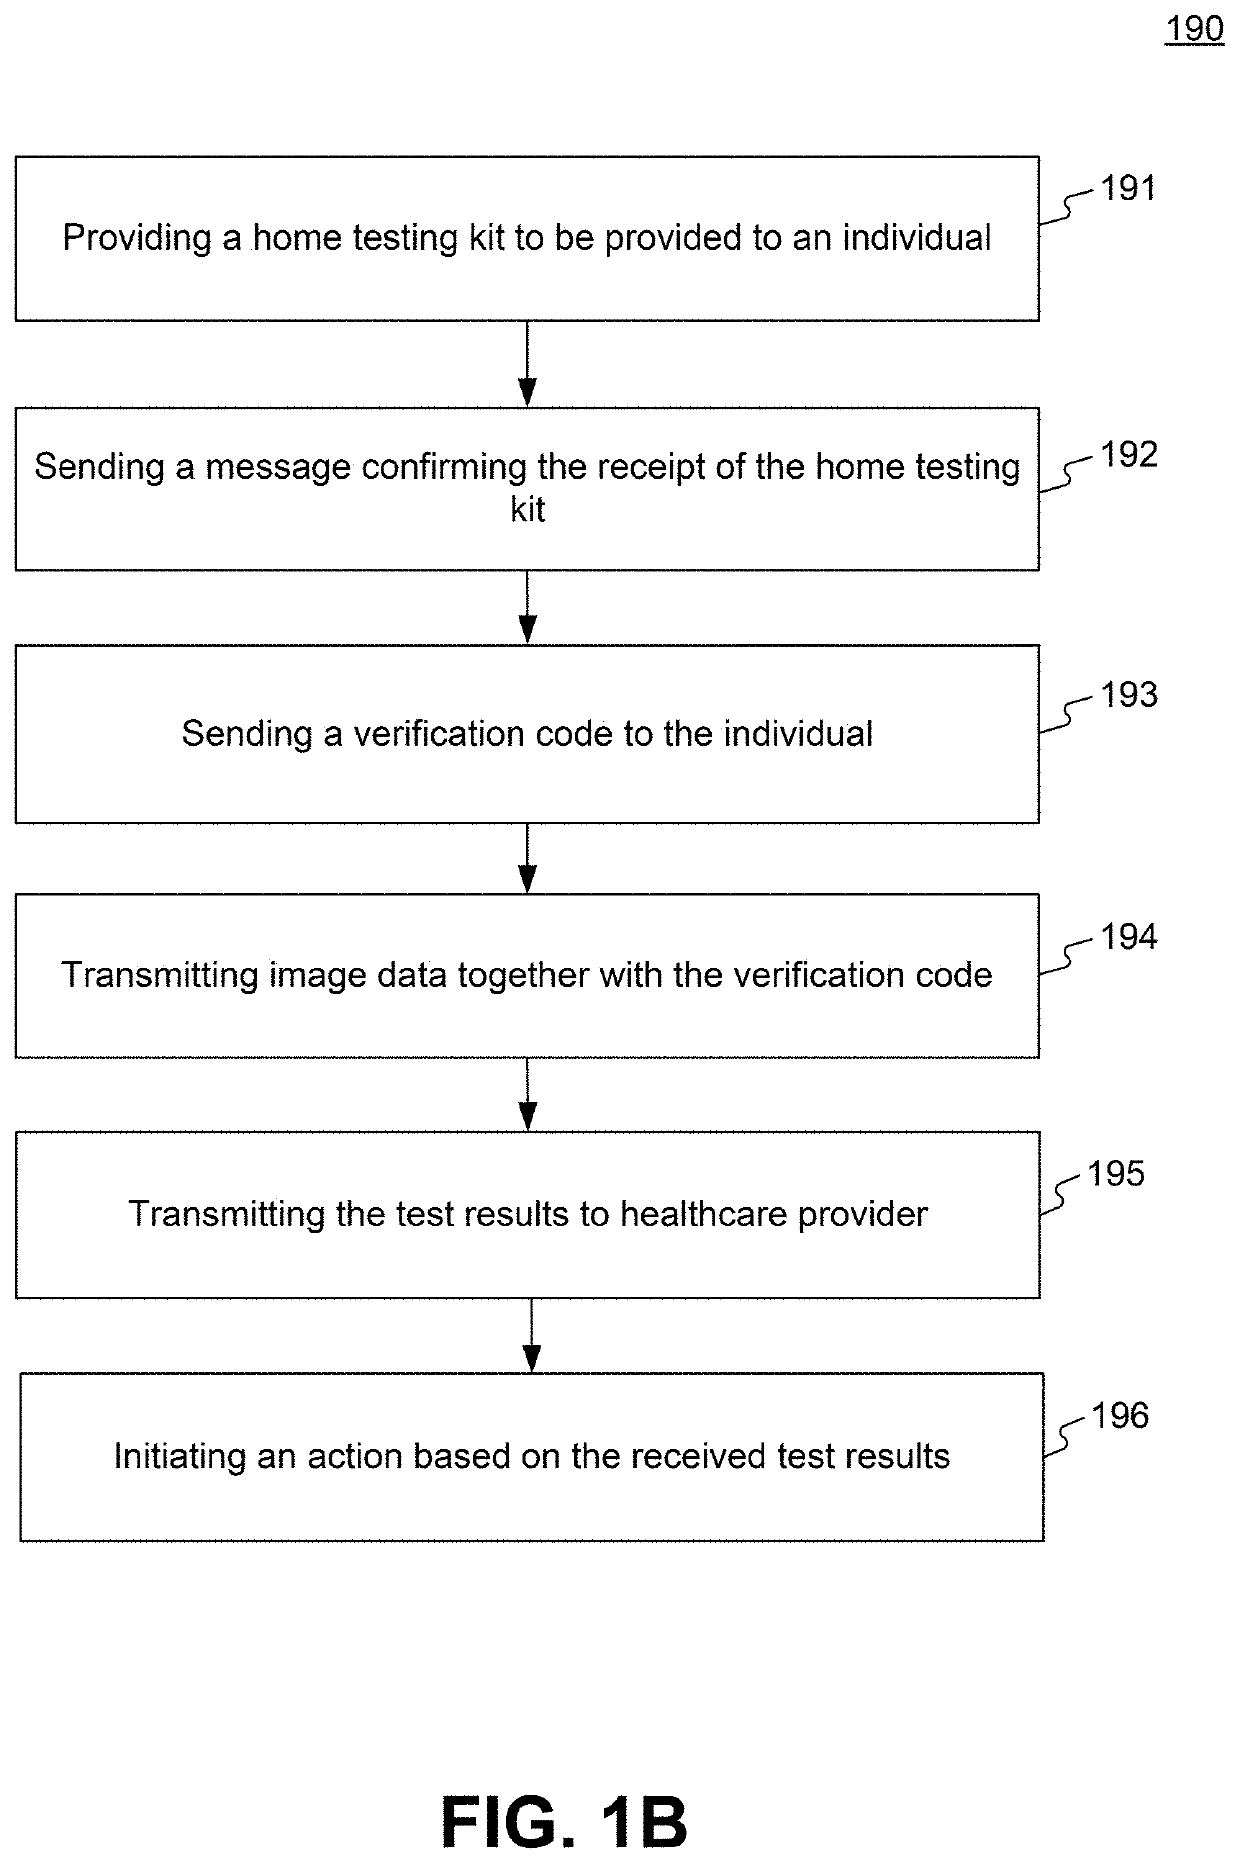 Tracking wound healing progress using remote image analysis